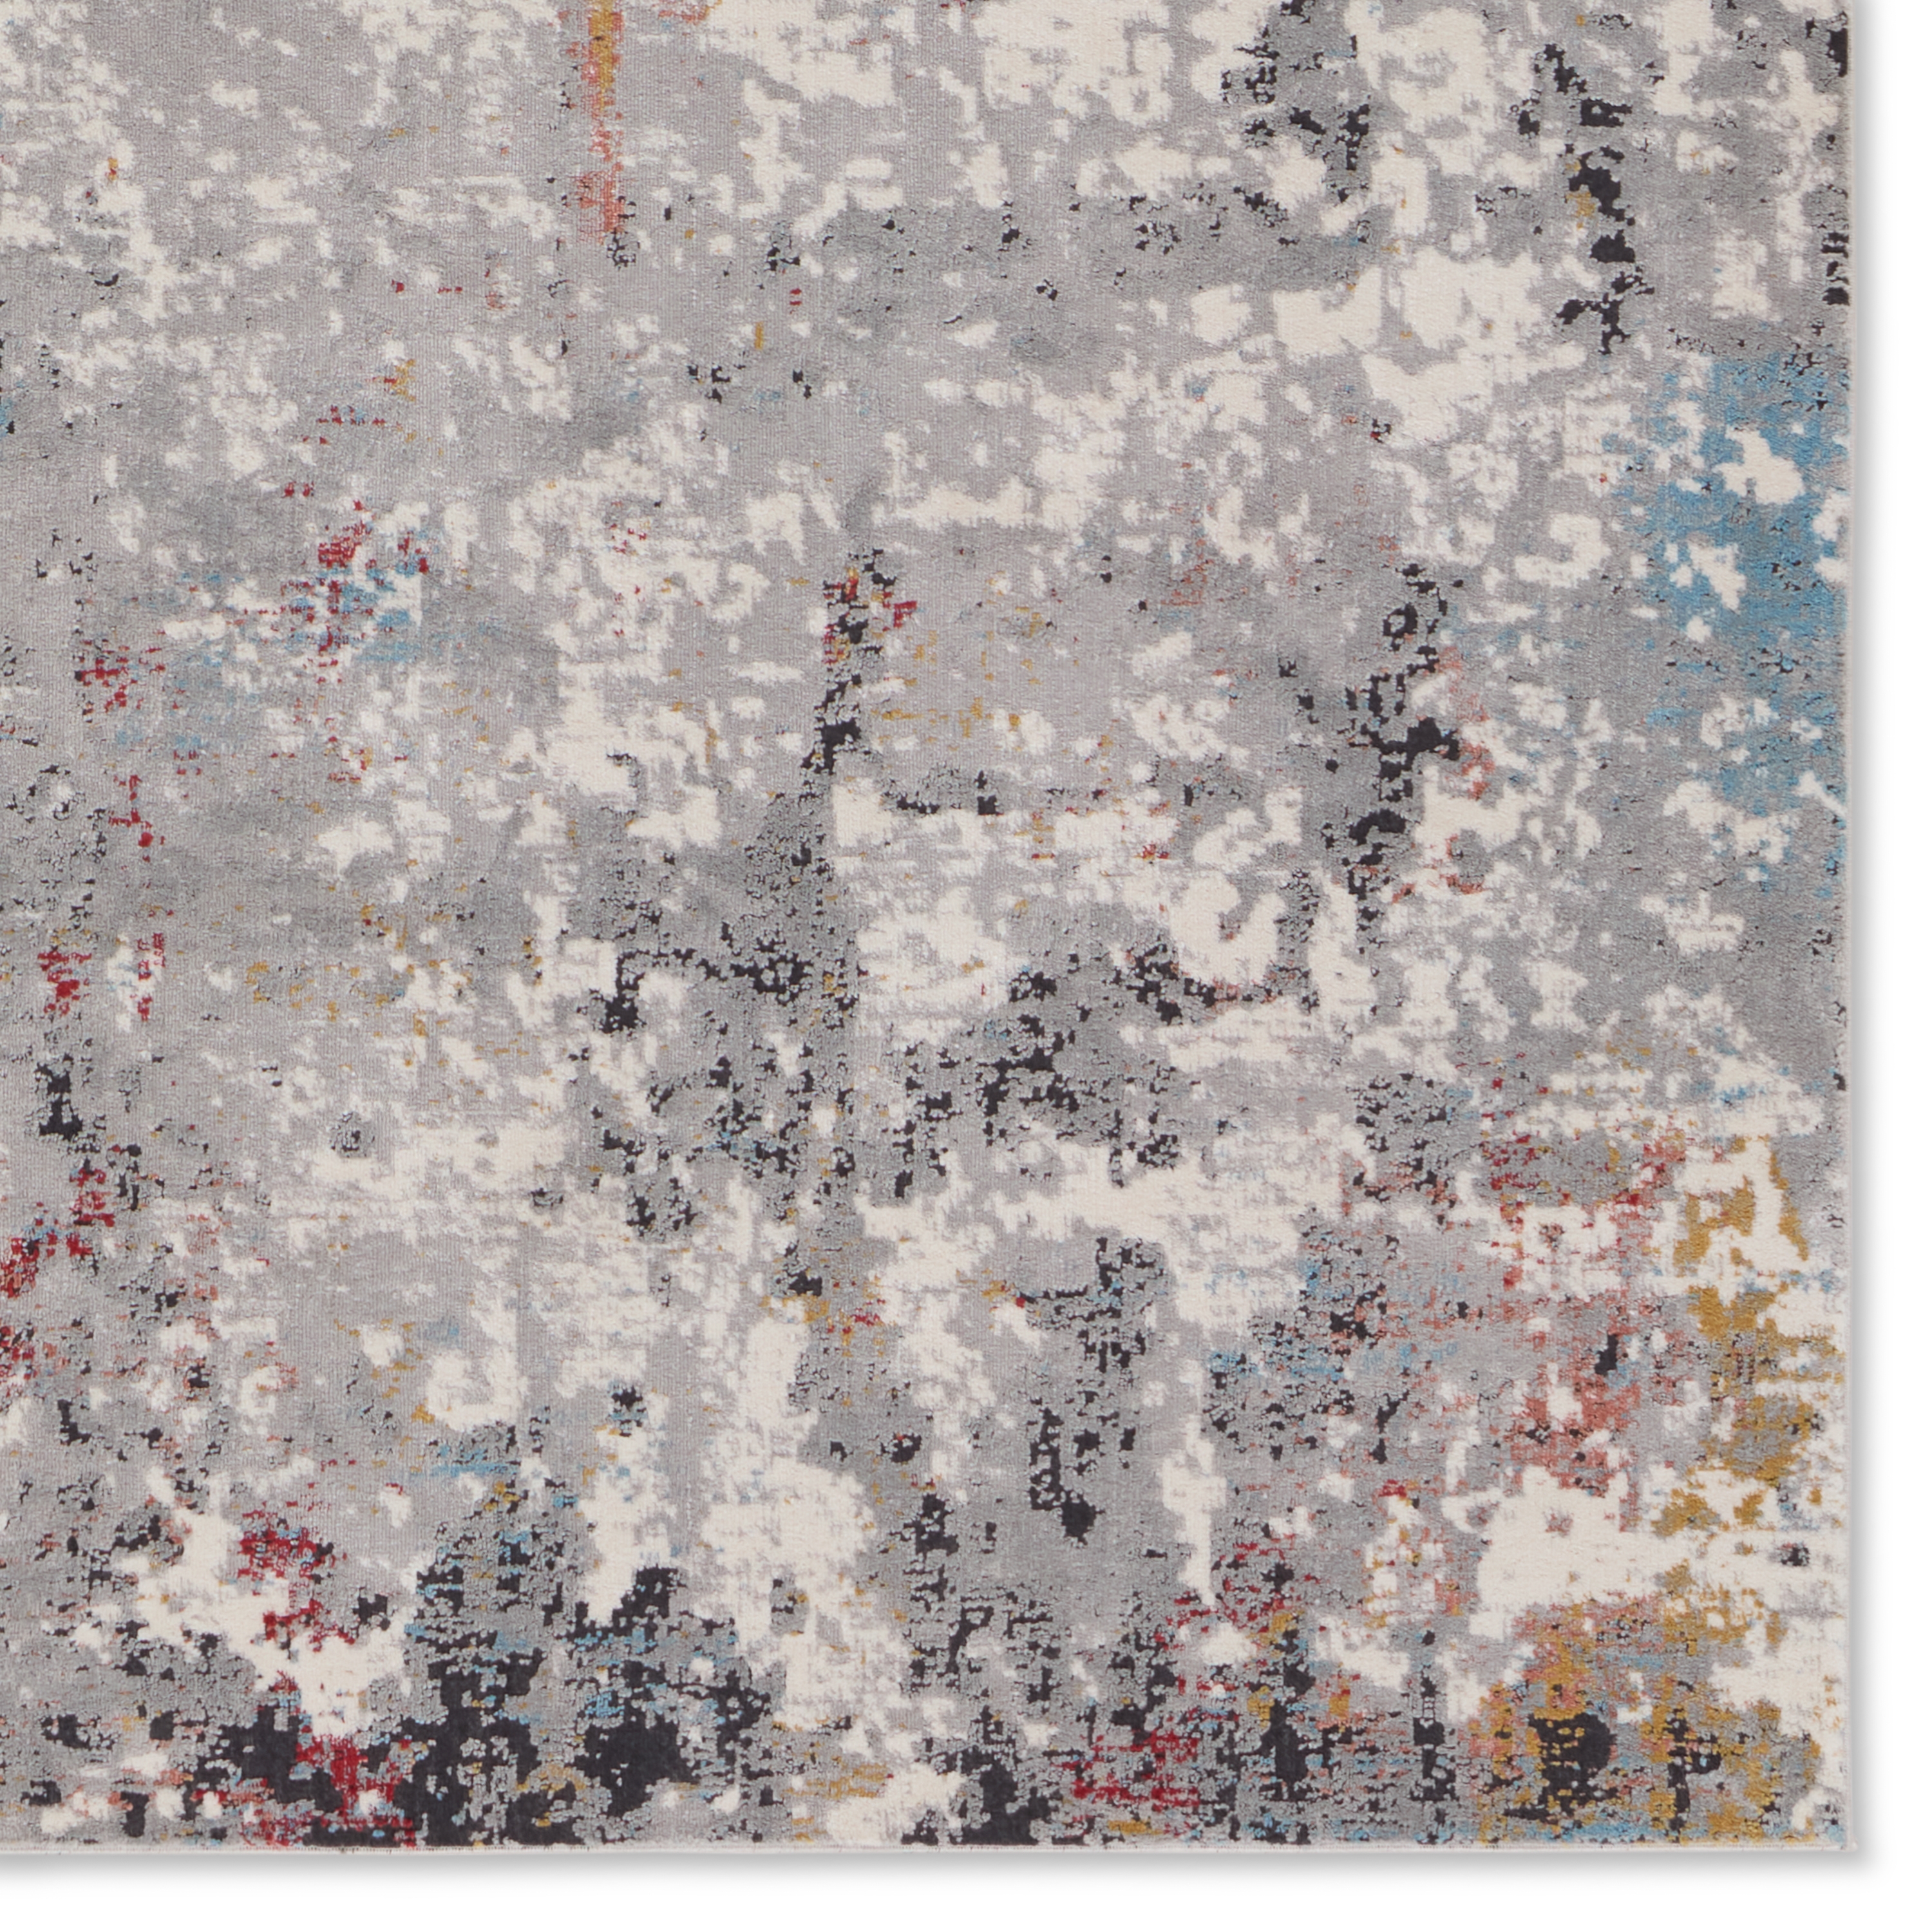 Vasari Abstract Gray/White Area Rug (9'X12') - Image 3